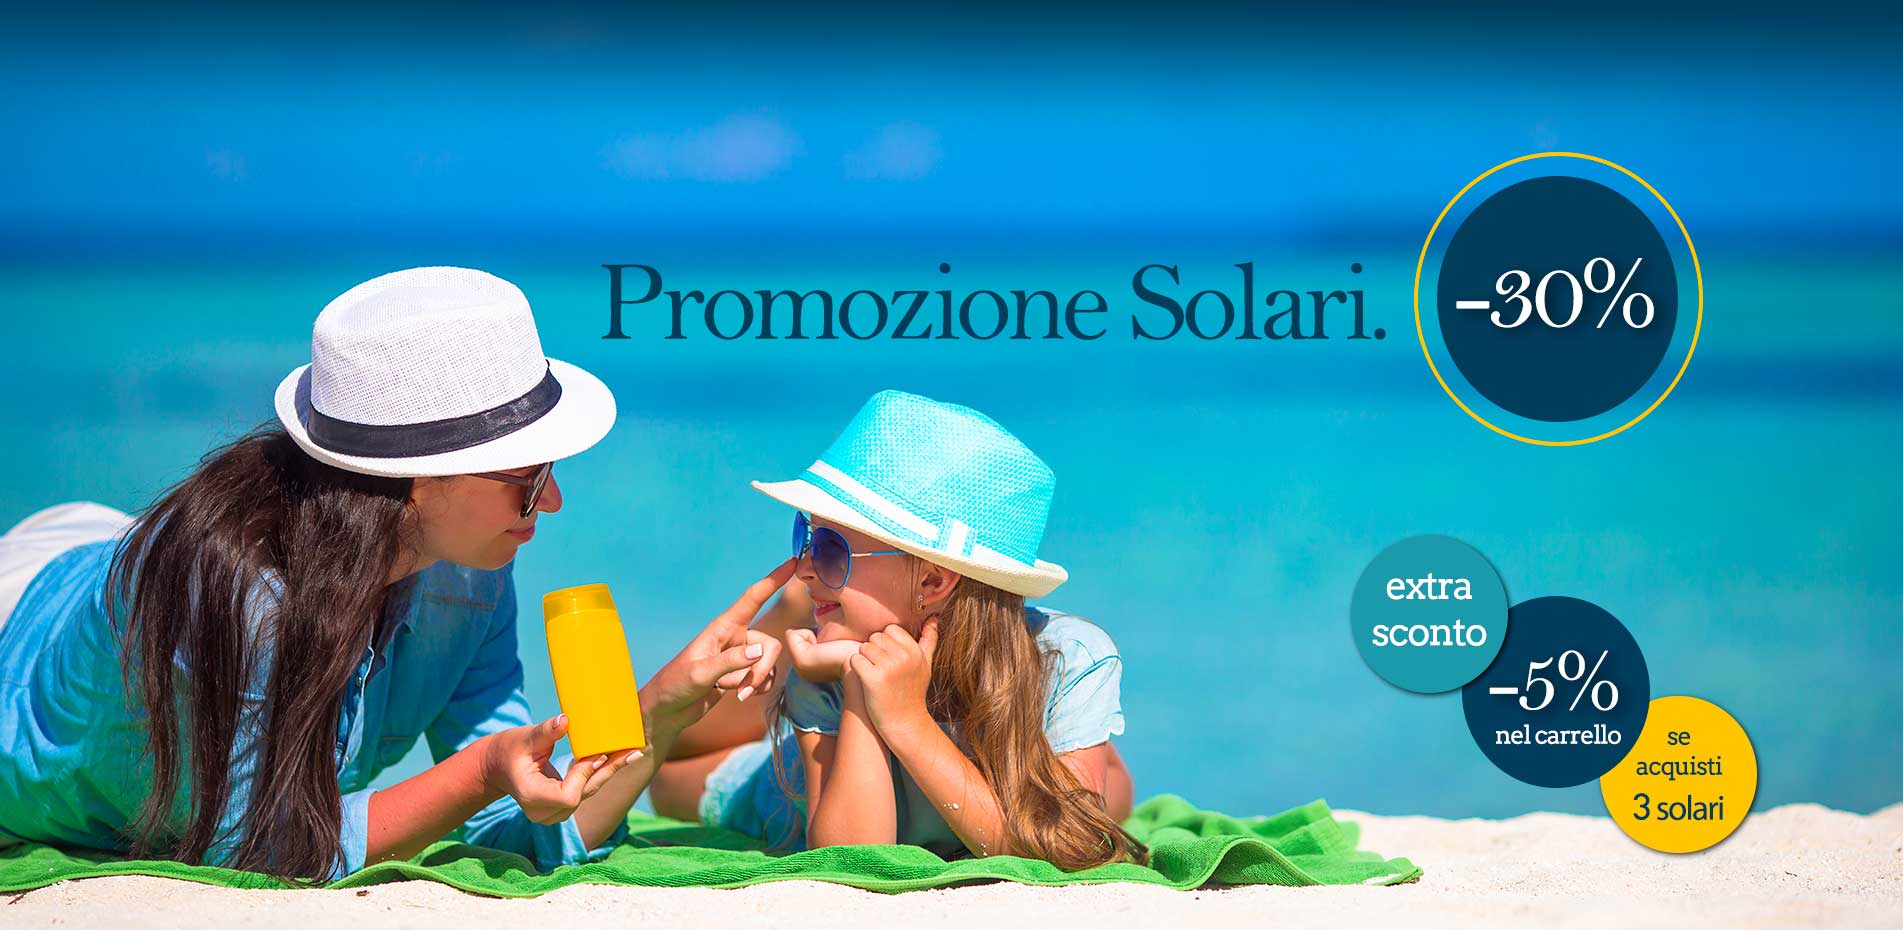 Promozioni solari